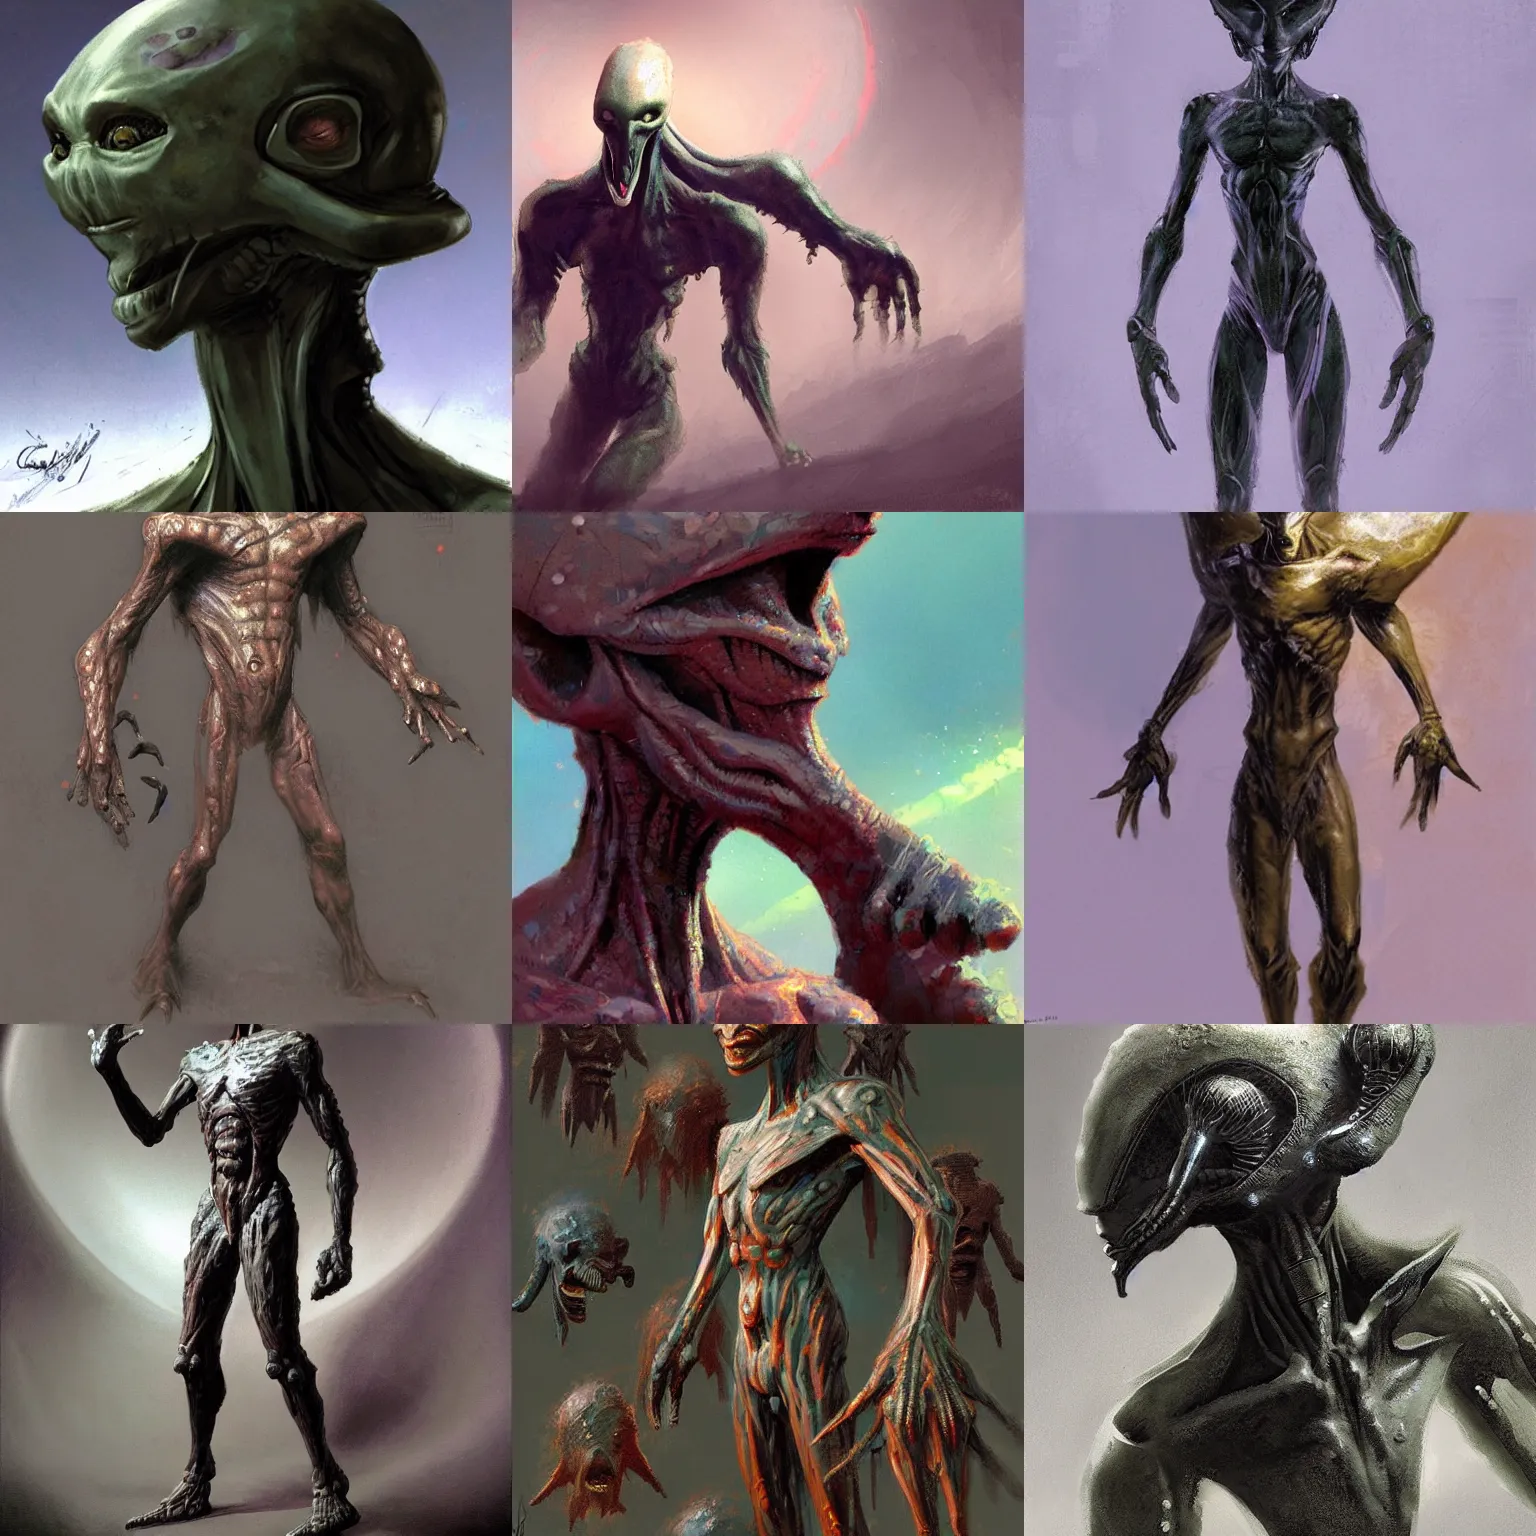 Prompt: a unique humanoid alien design by craig mullins